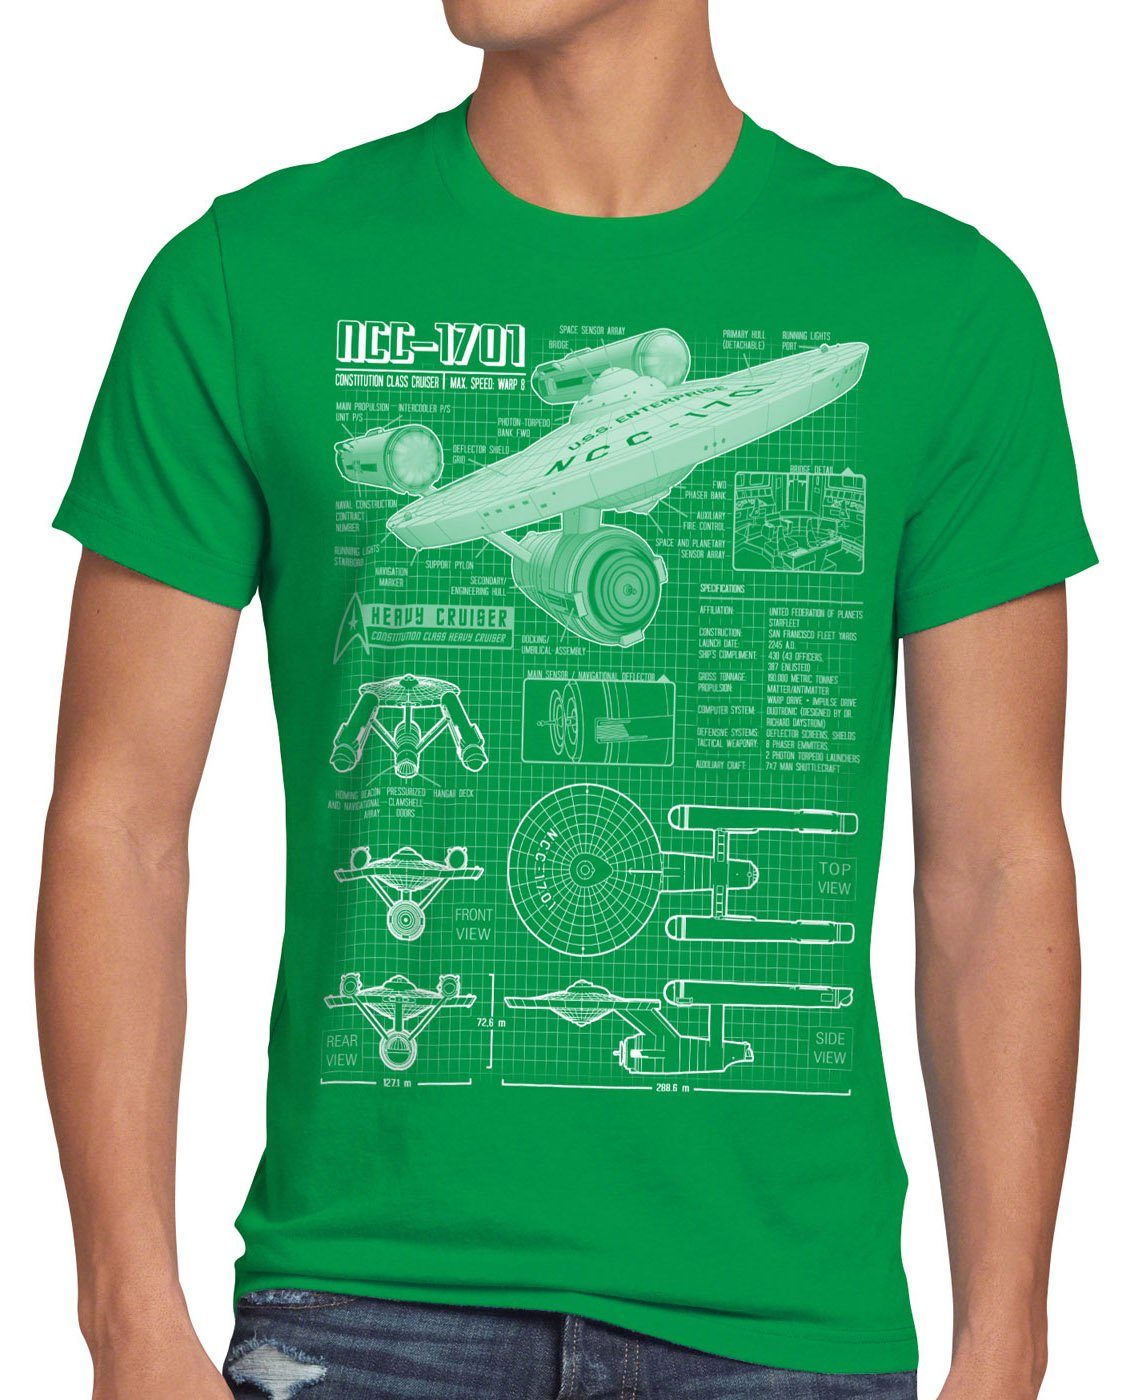 trek grün star sternenflotte Herren T-Shirt style3 Print-Shirt christopher trekkie NCC-1701 pike klingon